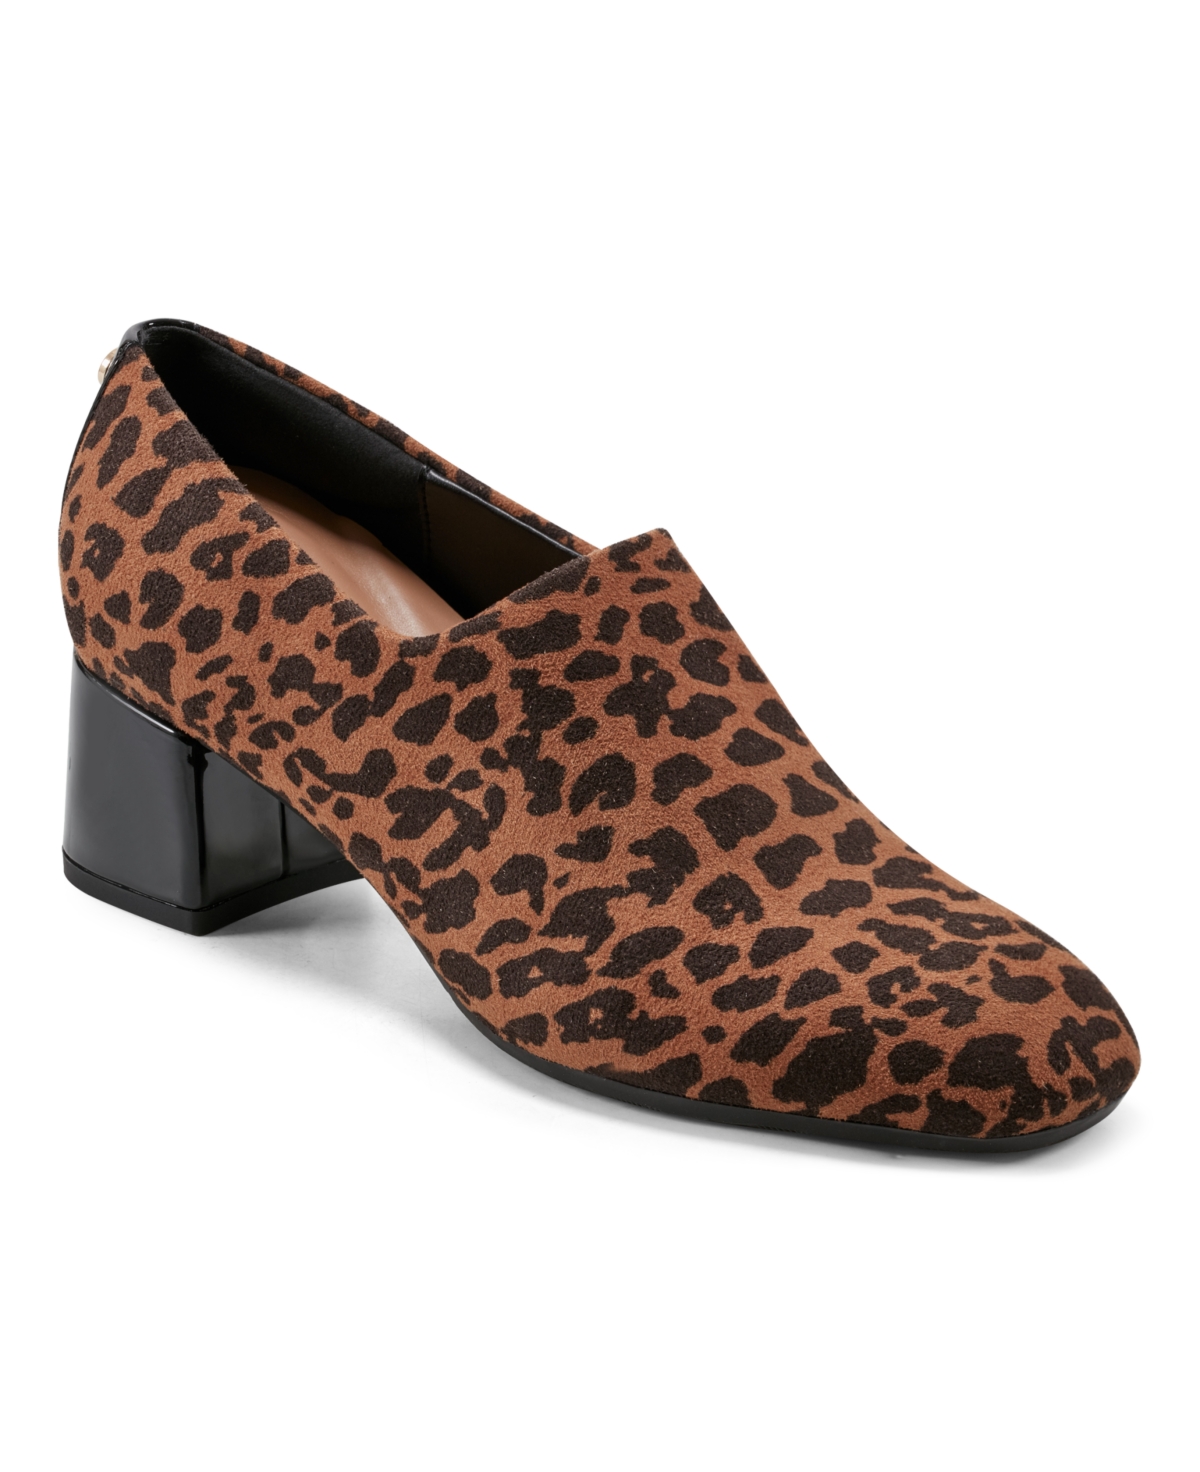 Women's Eflex Denisa Block Heel Slip-on Dress Pumps - Leopard